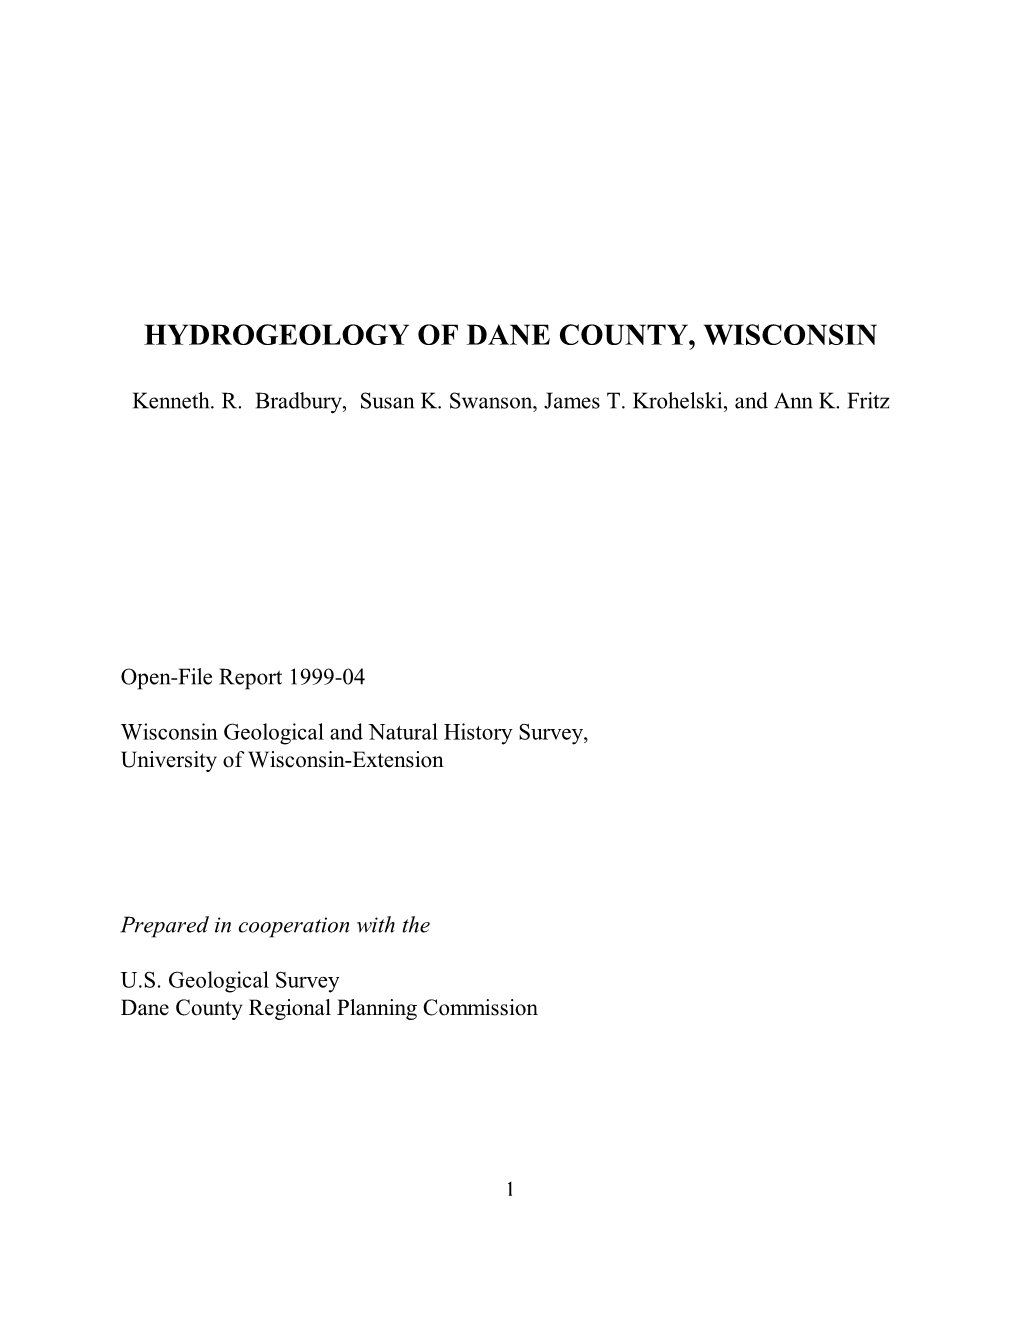 Hydrogeology of Dane County, Wisconsin